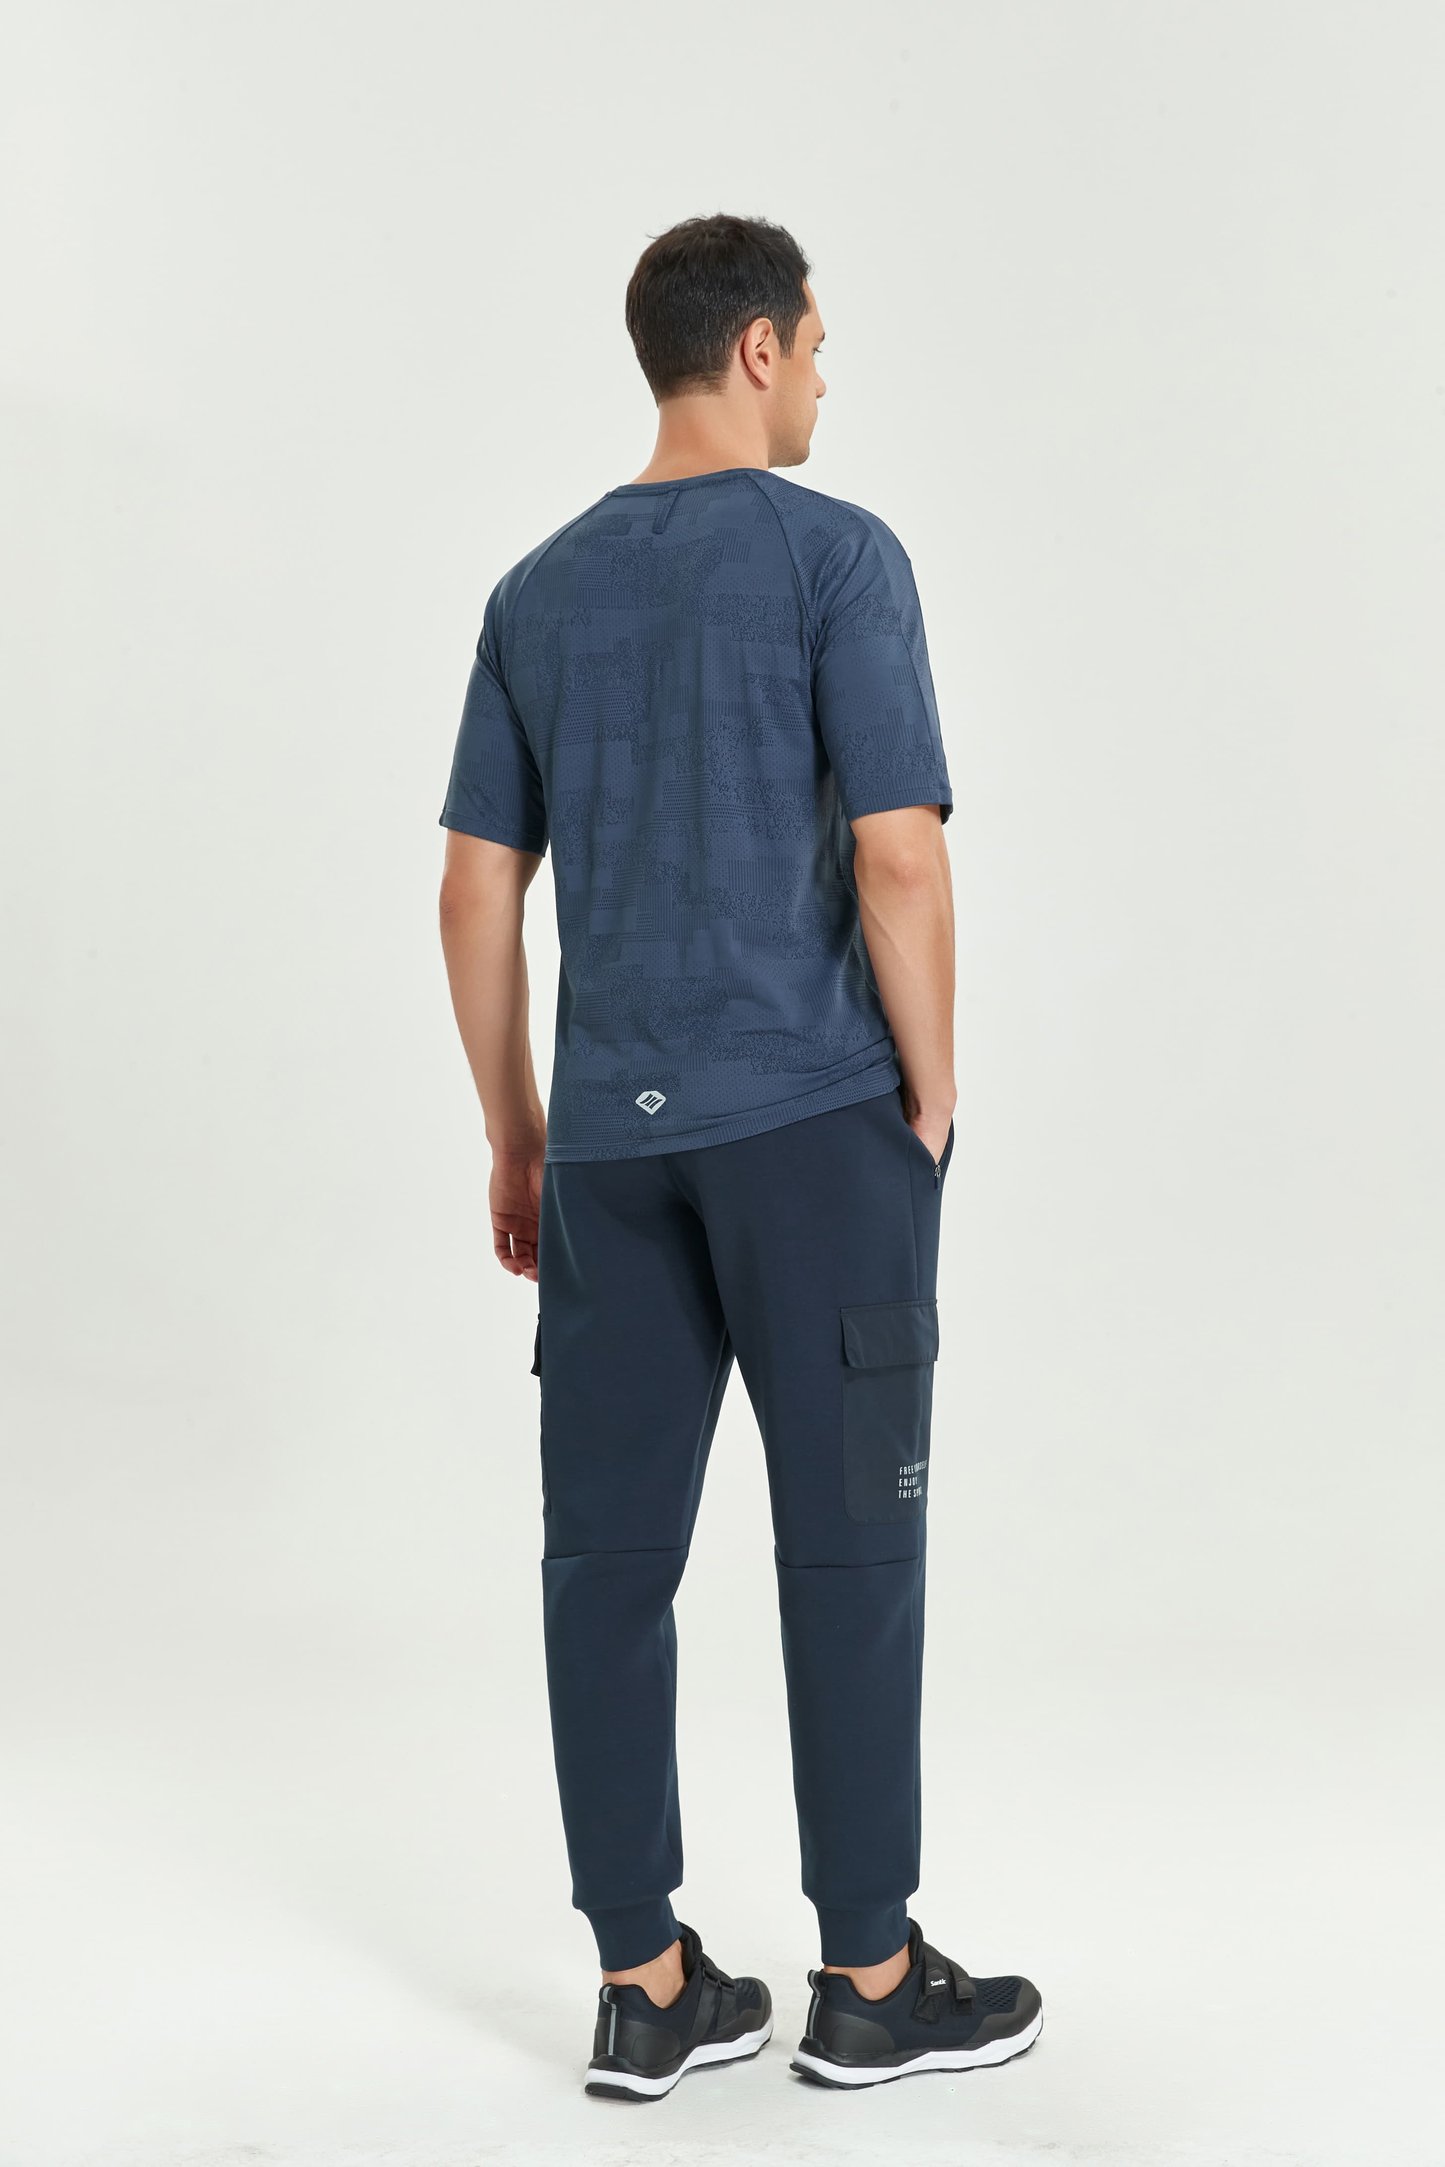 Men&#x27;s Activewear Sets with Pants